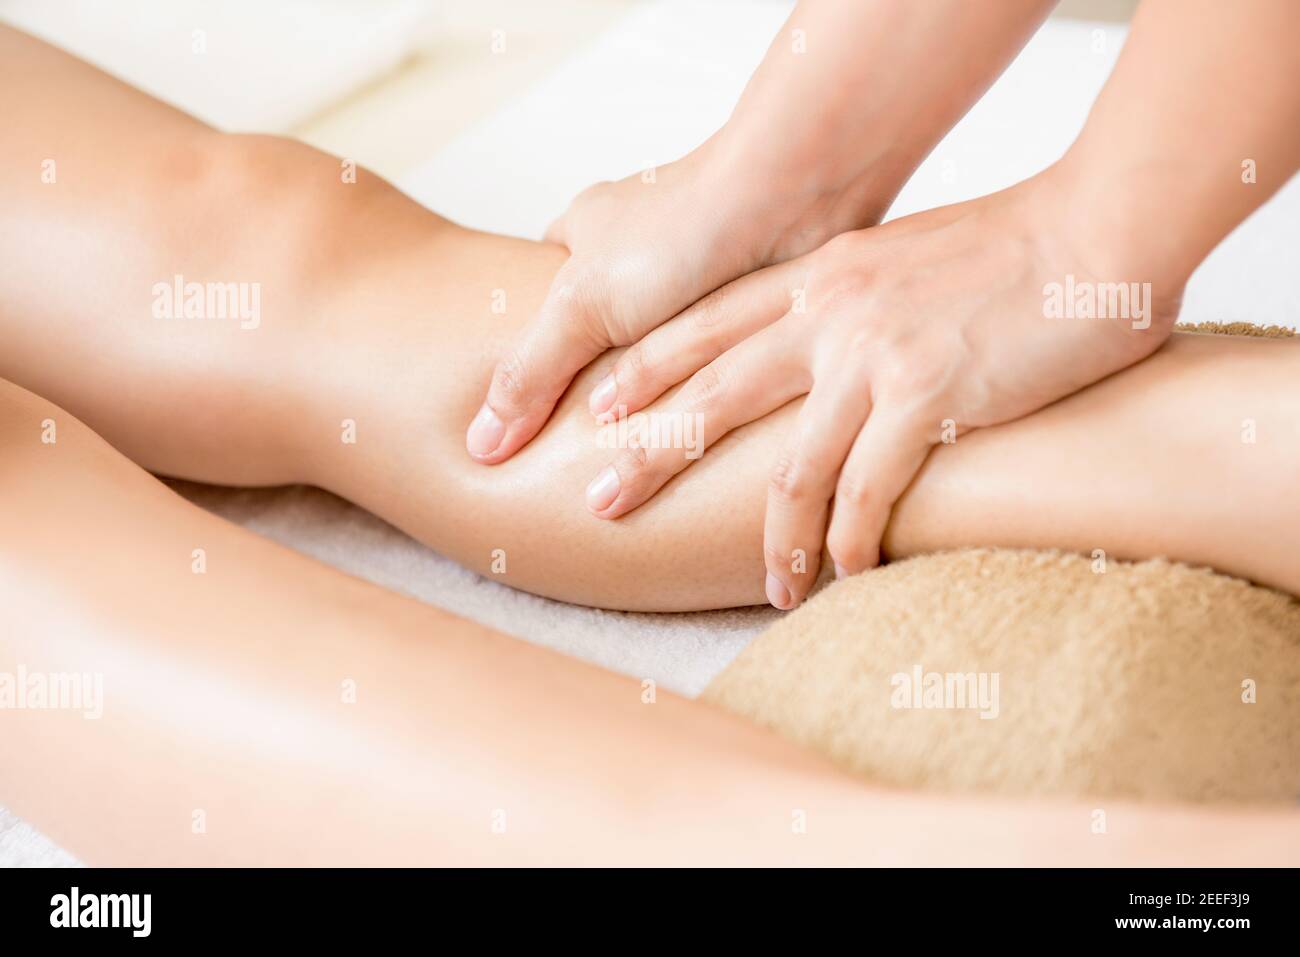 Professional therapist giving leg massage to a woman Stock Photo